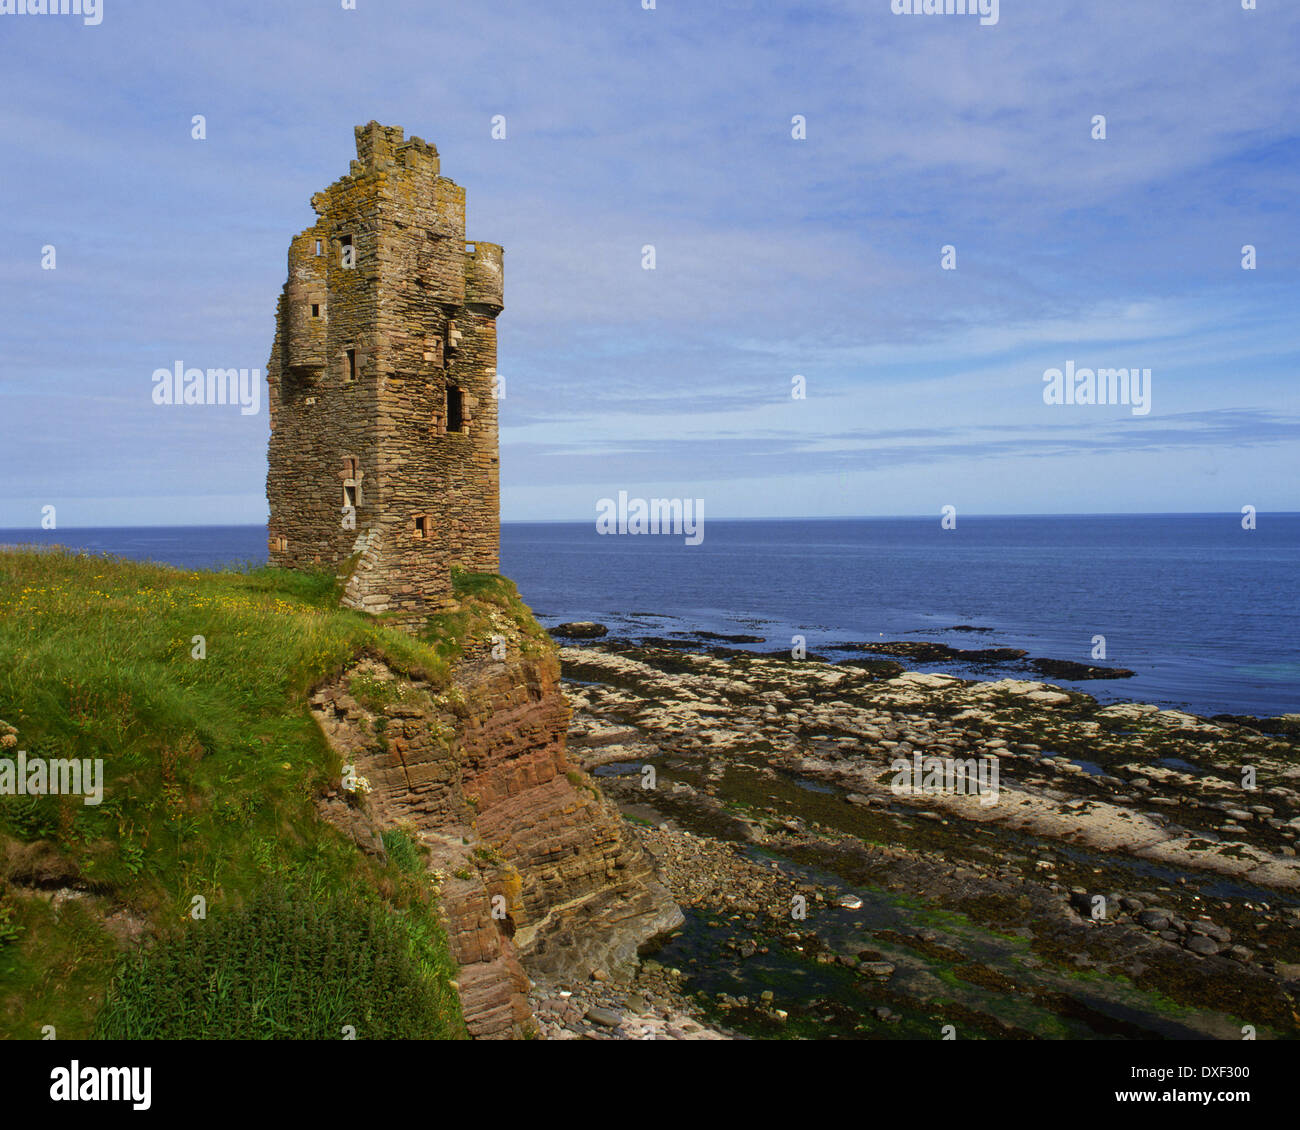 Keiss antiguo castillo, un castillo del siglo XVI encaramado sobre los altos acantilados en la costa de Caithness, N/E Escocia. Foto de stock